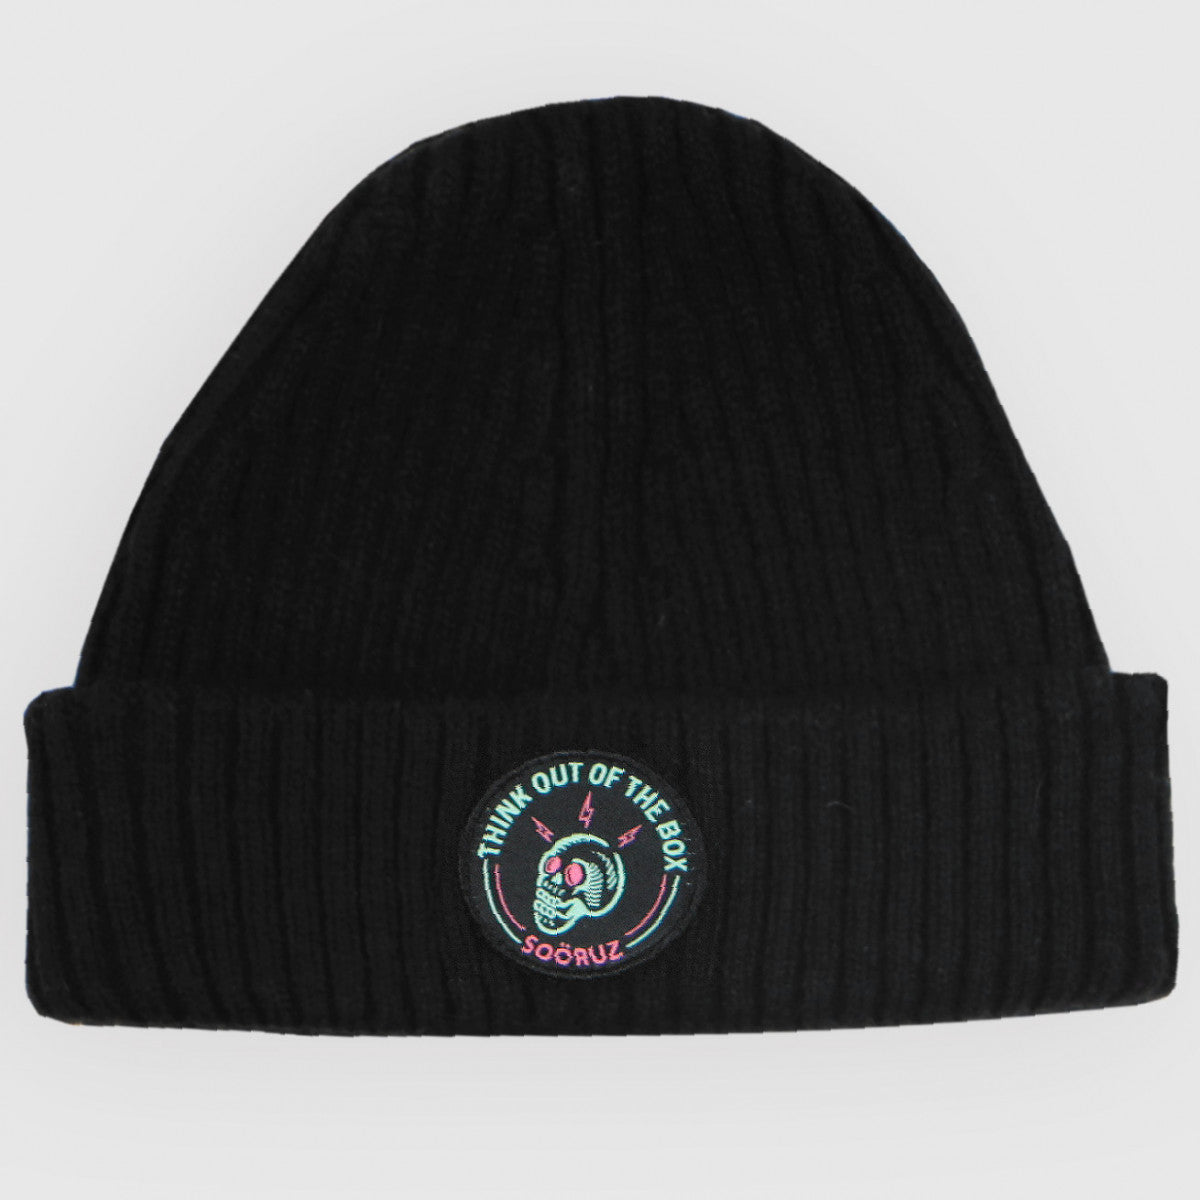 SOORUZ Beanie Think כובע צמר בצבע שחור 2022/23